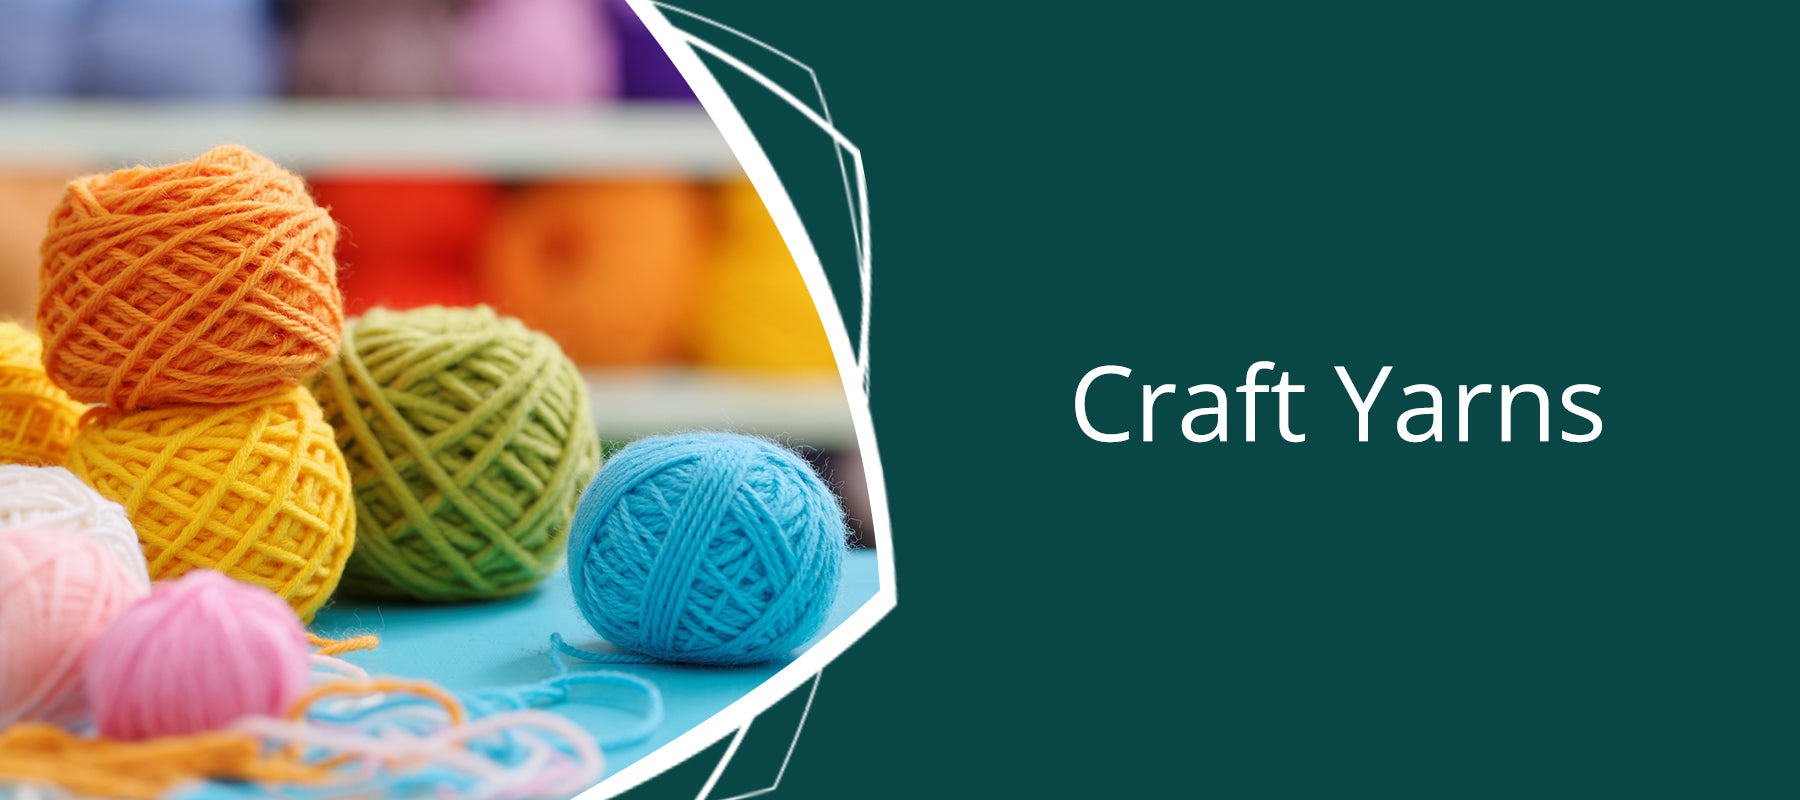 Craft Yarns - Thread Collective Australia